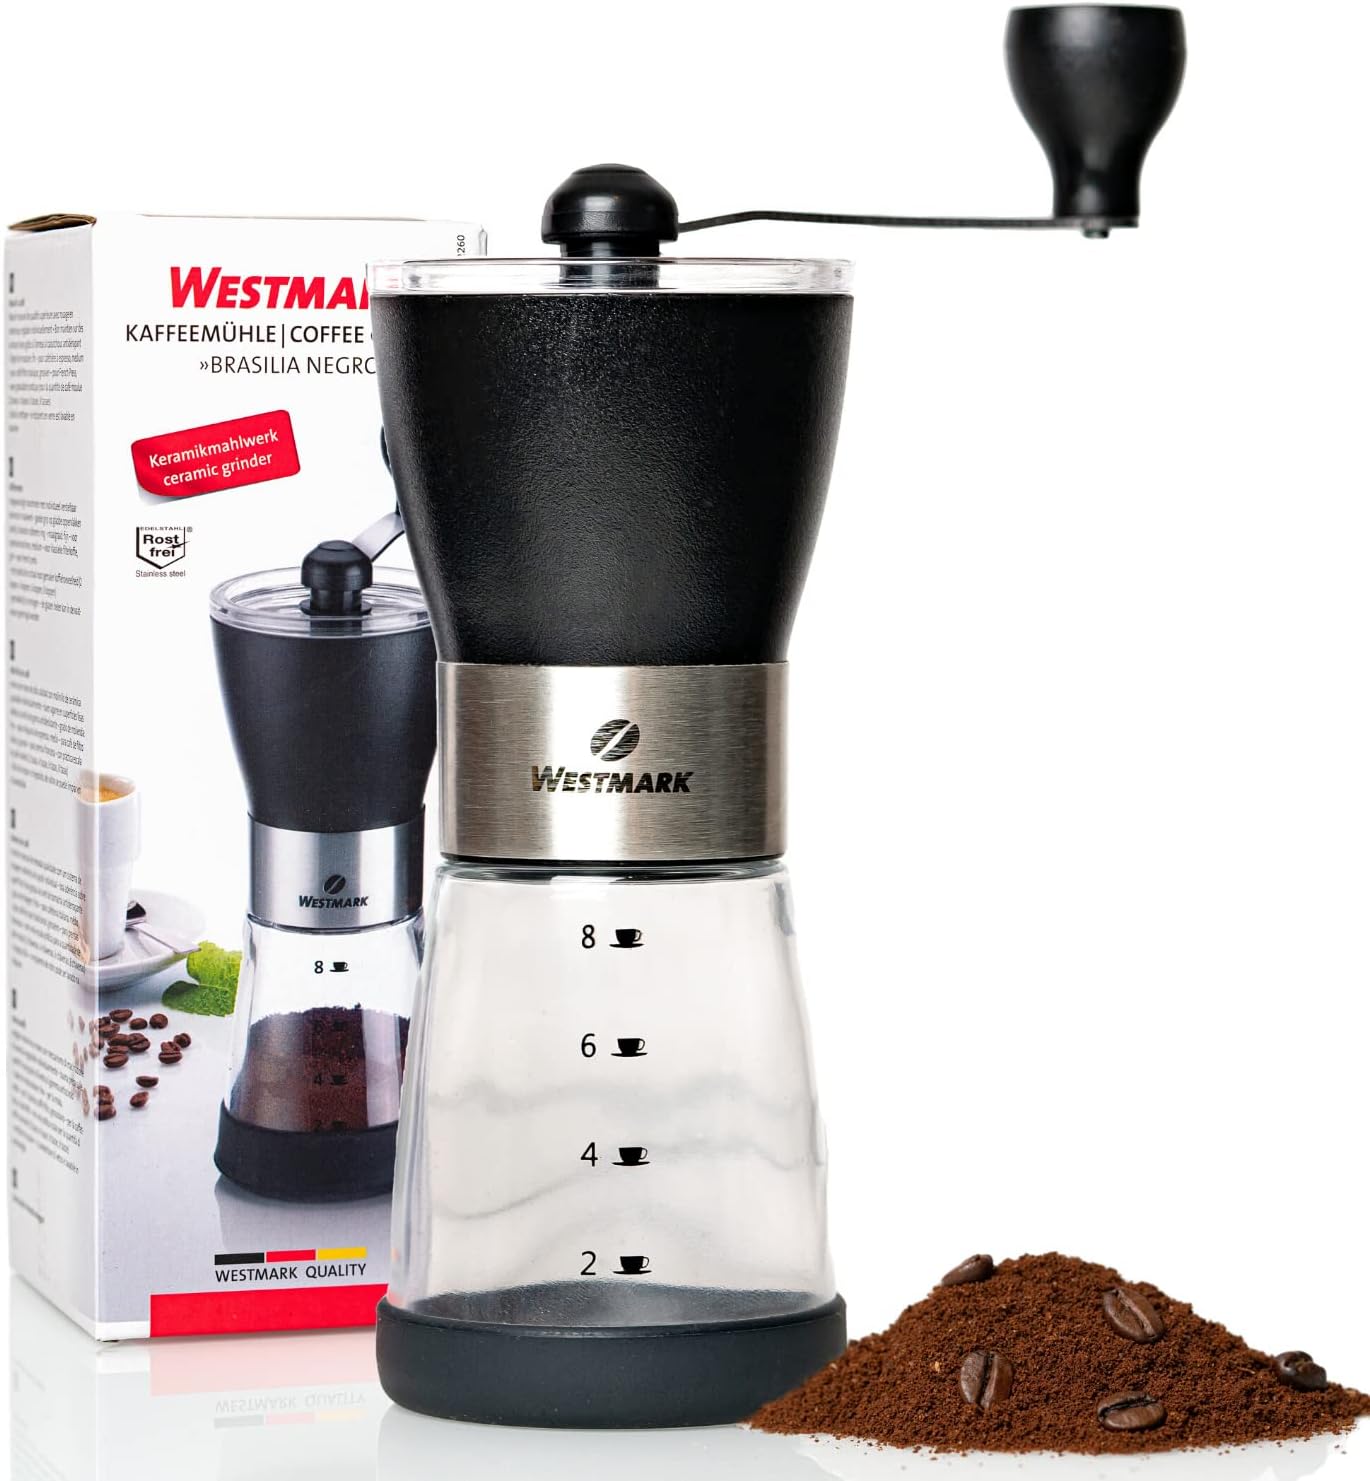 Westmark Manual Coffee Grinder - Holds Up to 8 Cups of Coffee Like Barista - Durable & Adjustable Ceramic Grinder - 21.3 cm (Black)